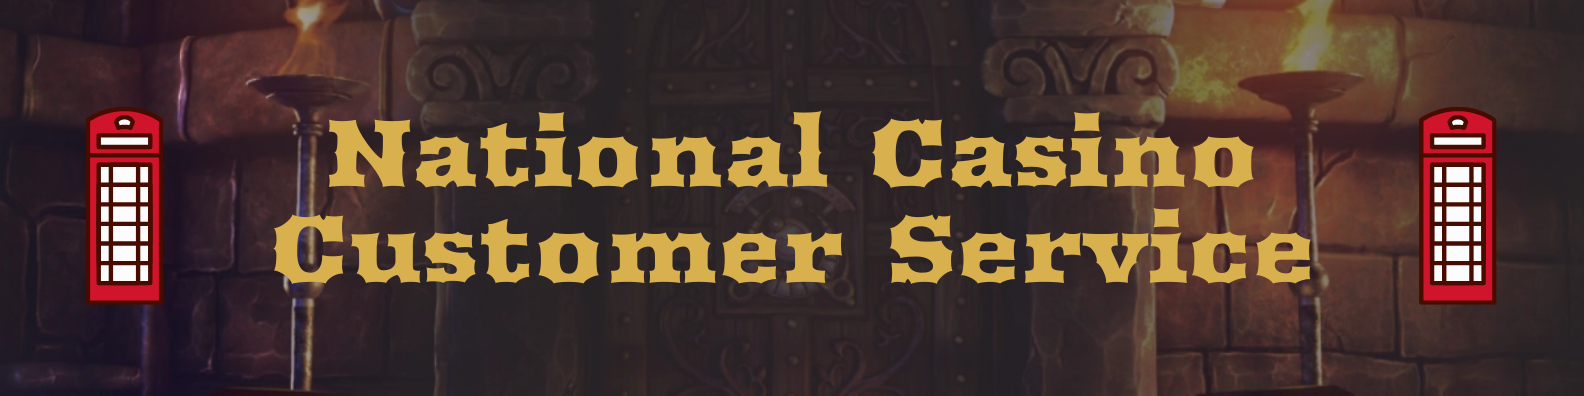 National Casino Customer Service